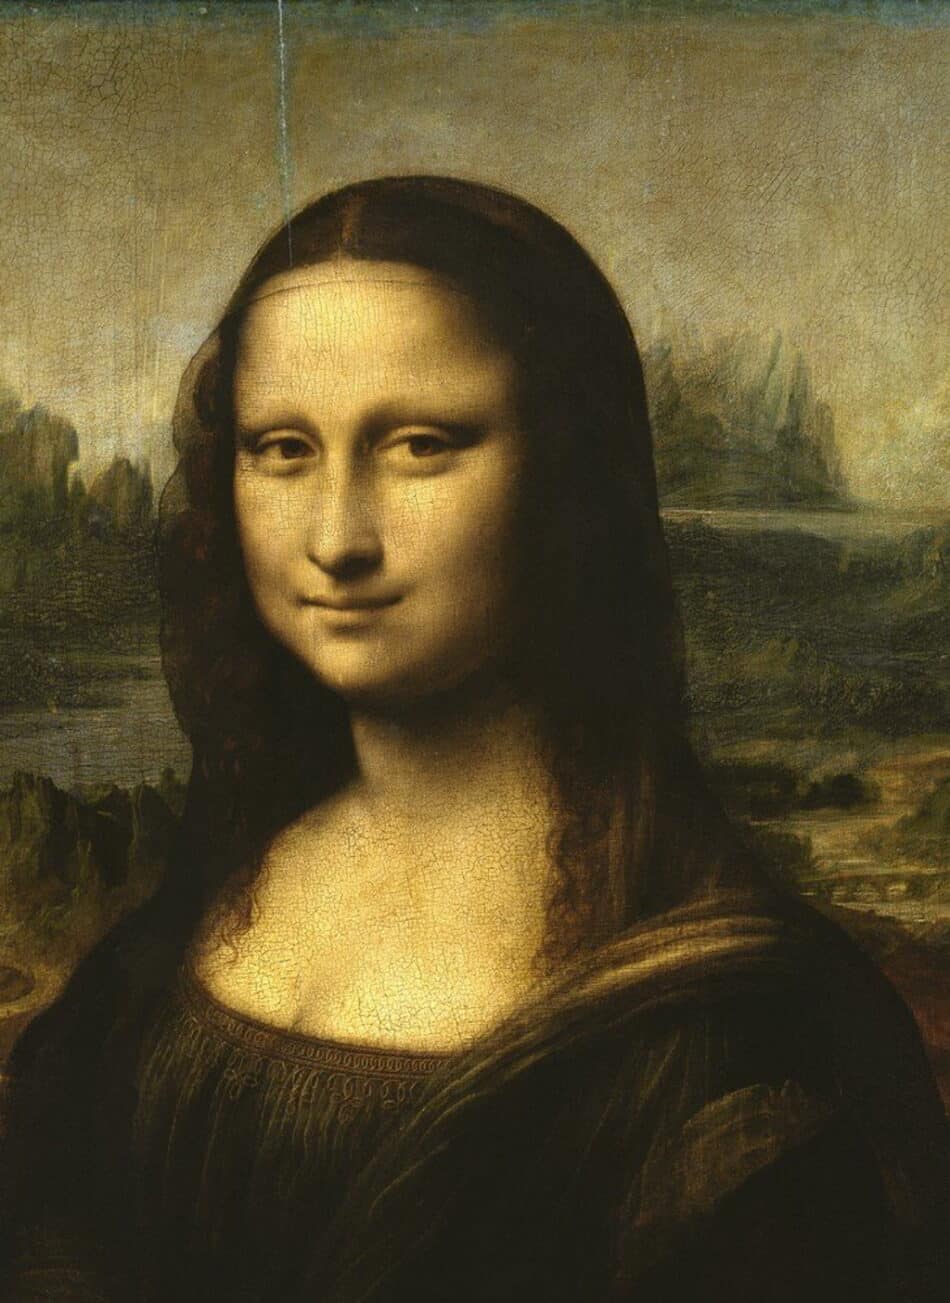 La Mona Lisa realmente está sonriendo